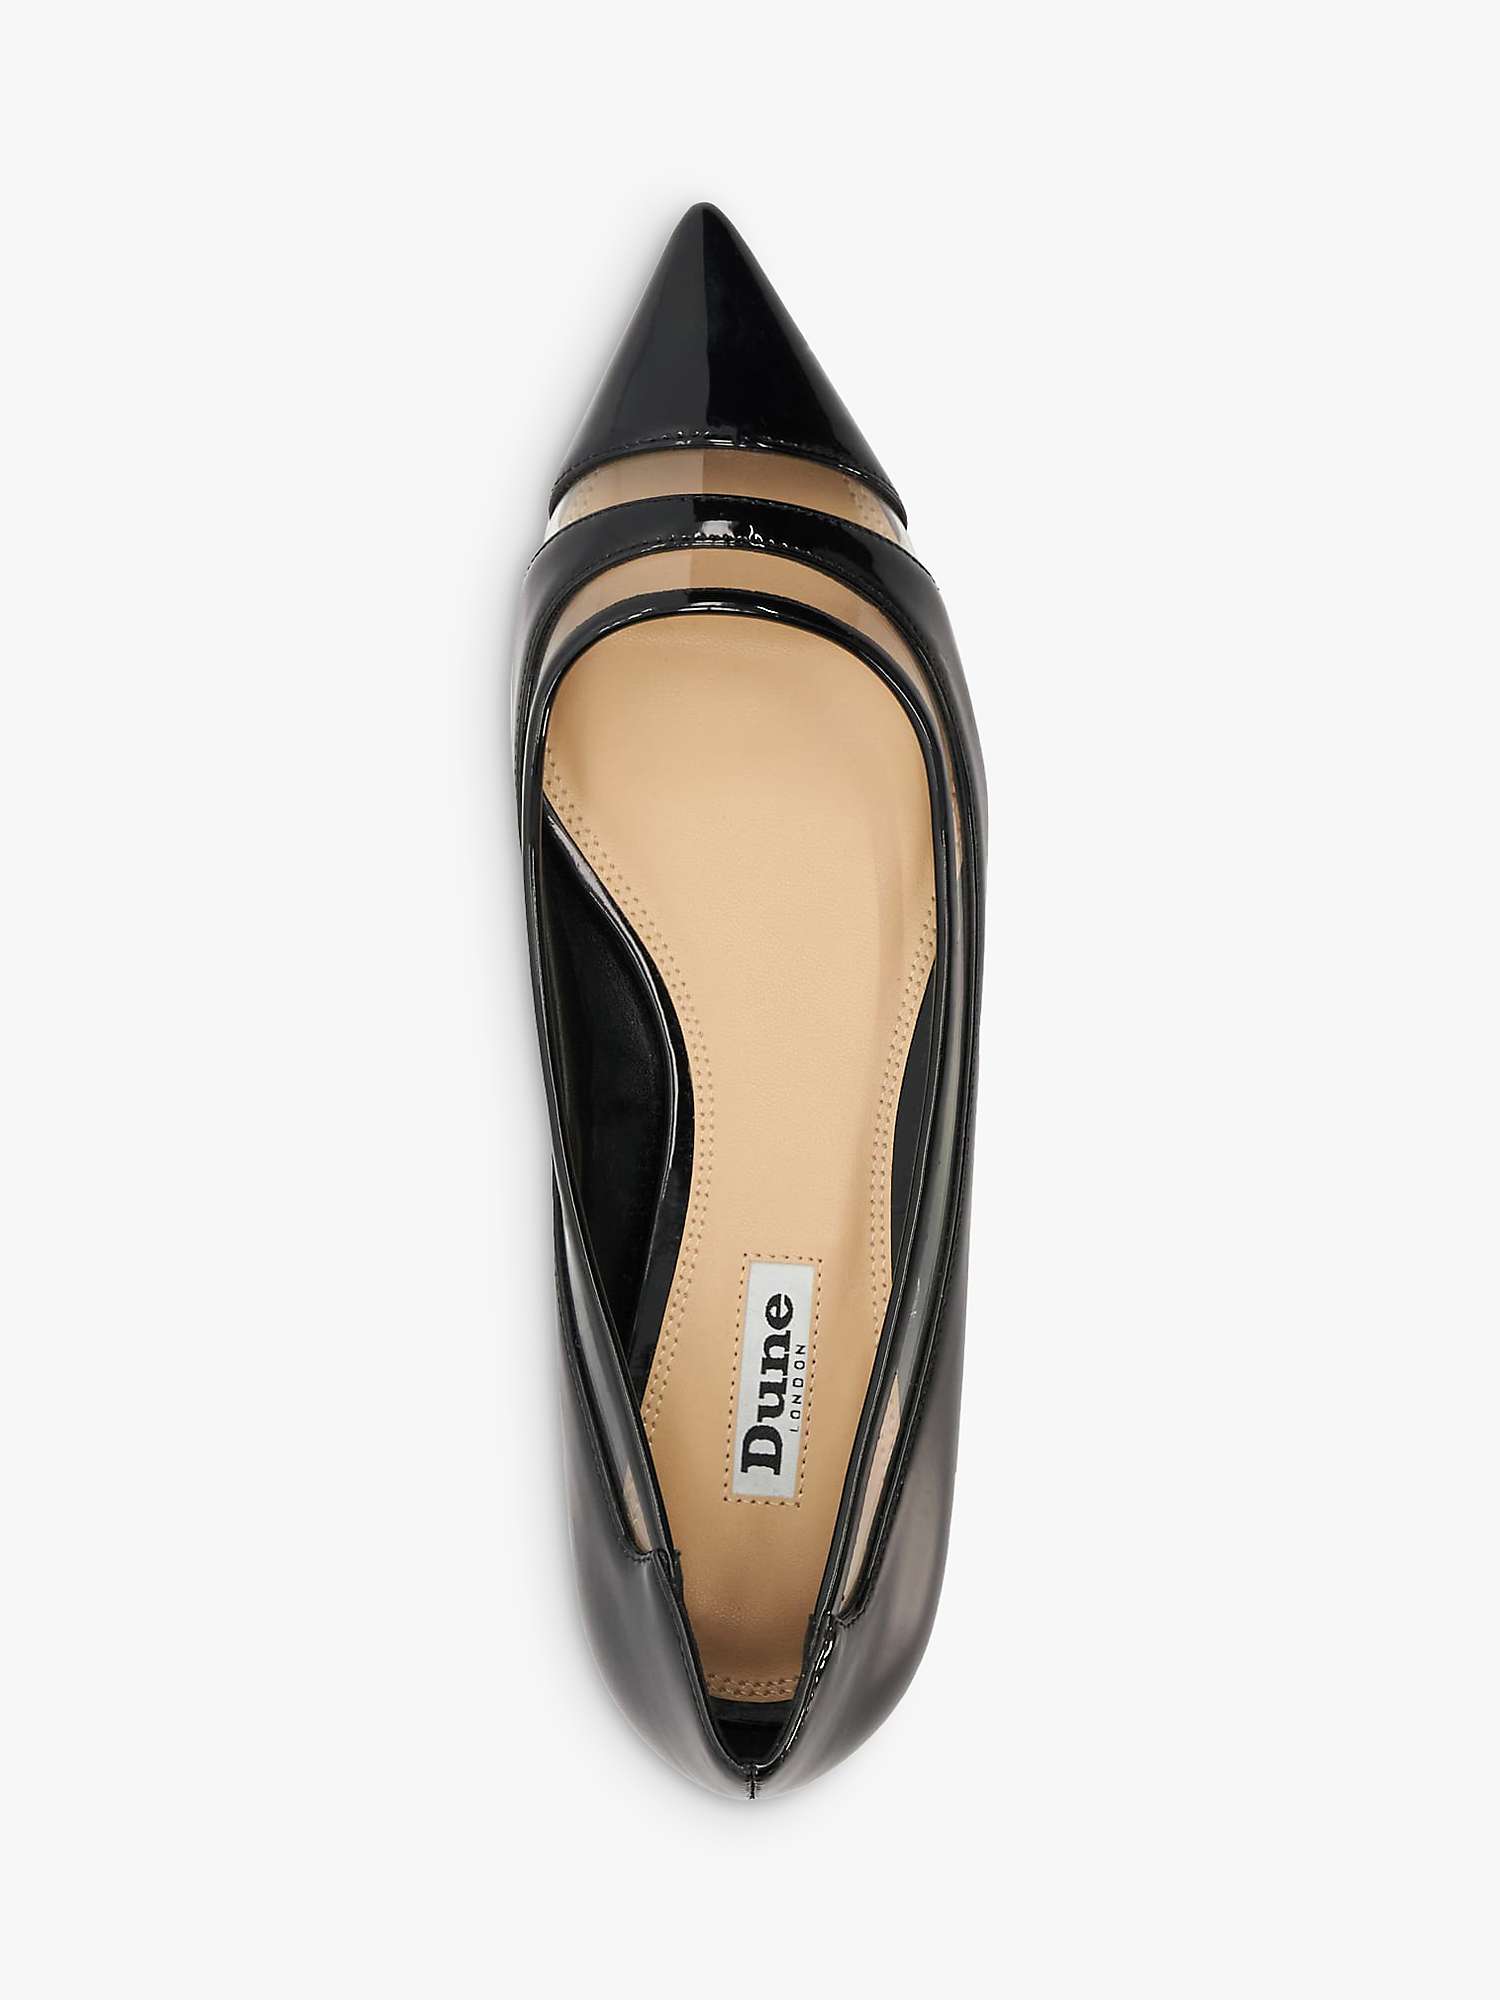 Buy Dune Hepburn Vinyl Panel Patent Pointed Toe Court Shoes, Black Online at johnlewis.com